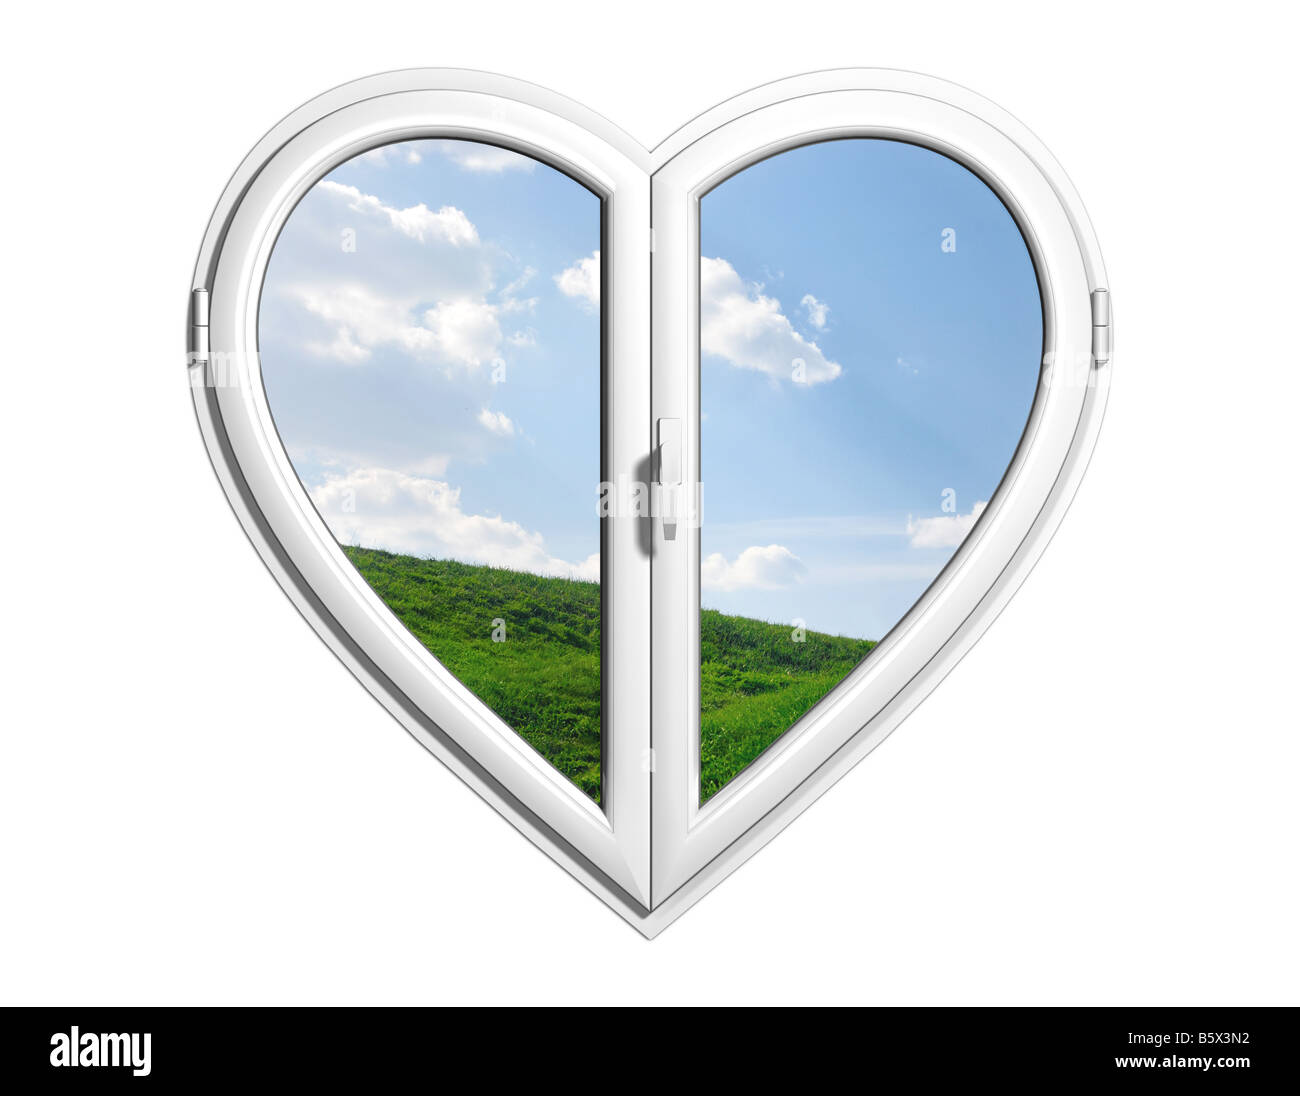 Heart shaped window Stock Photo